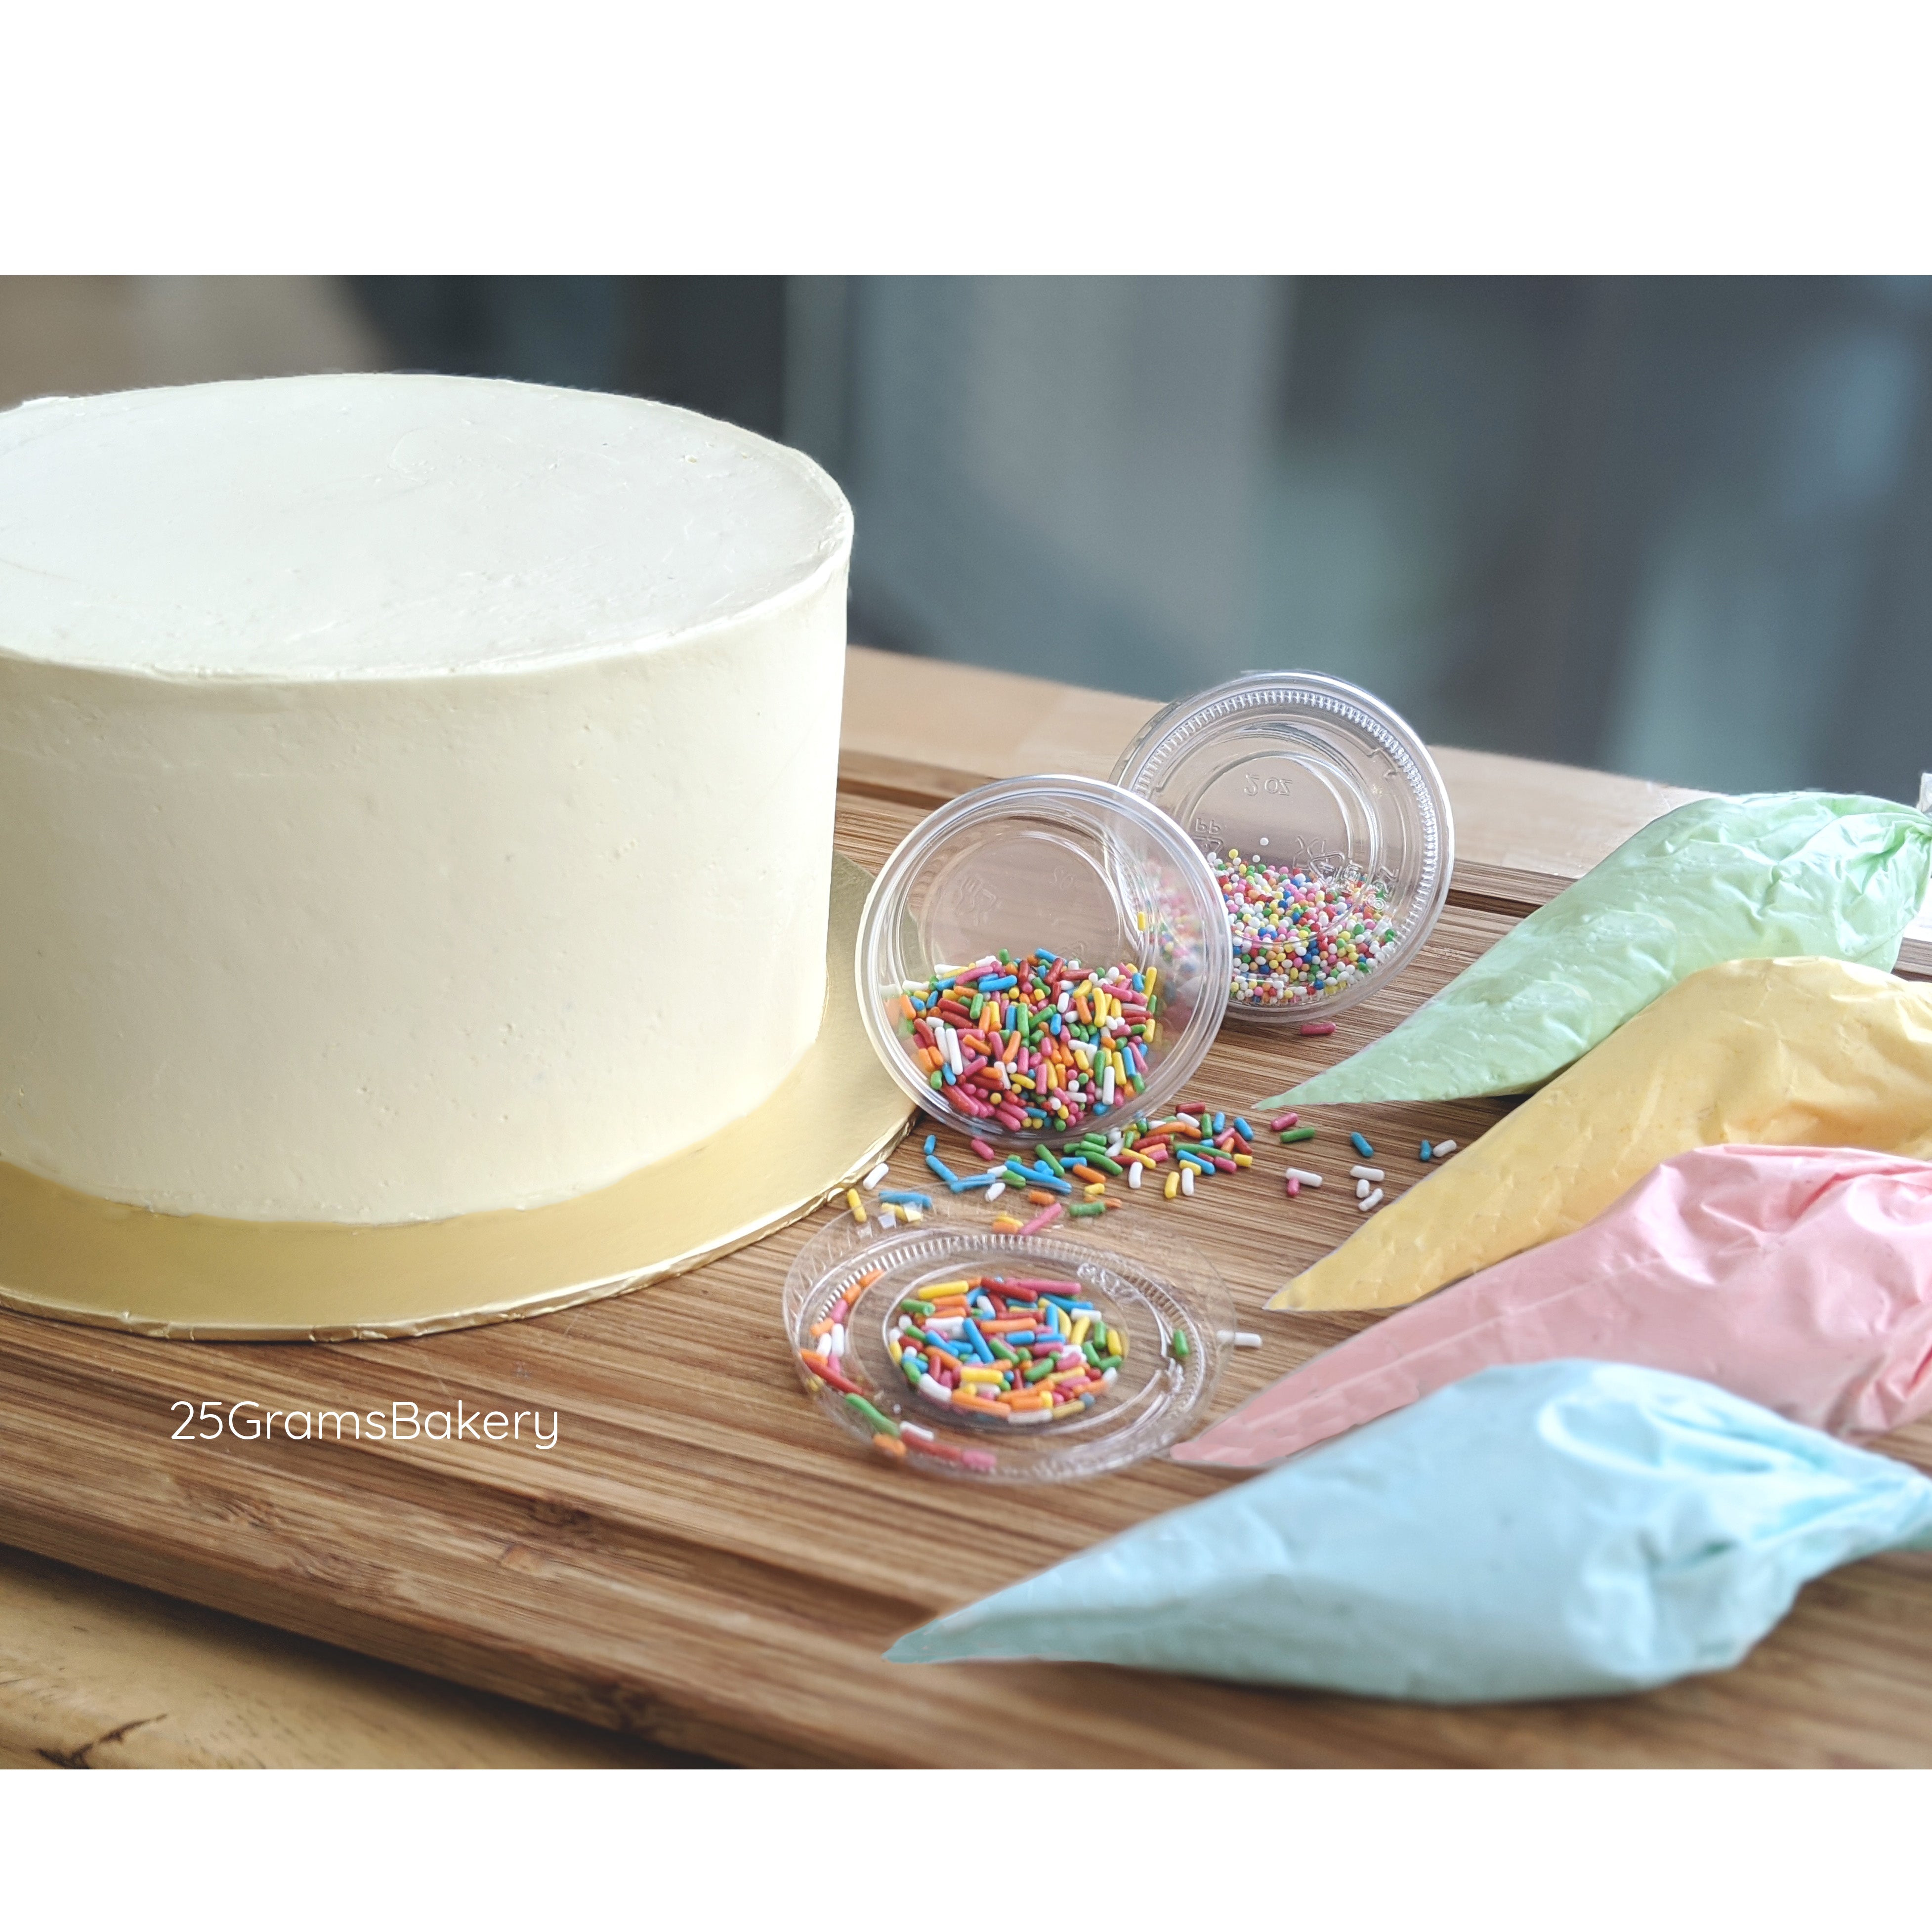 DIY Cake Decorating Kit *Vegan /GF Option Available* – 25Grams Bakery